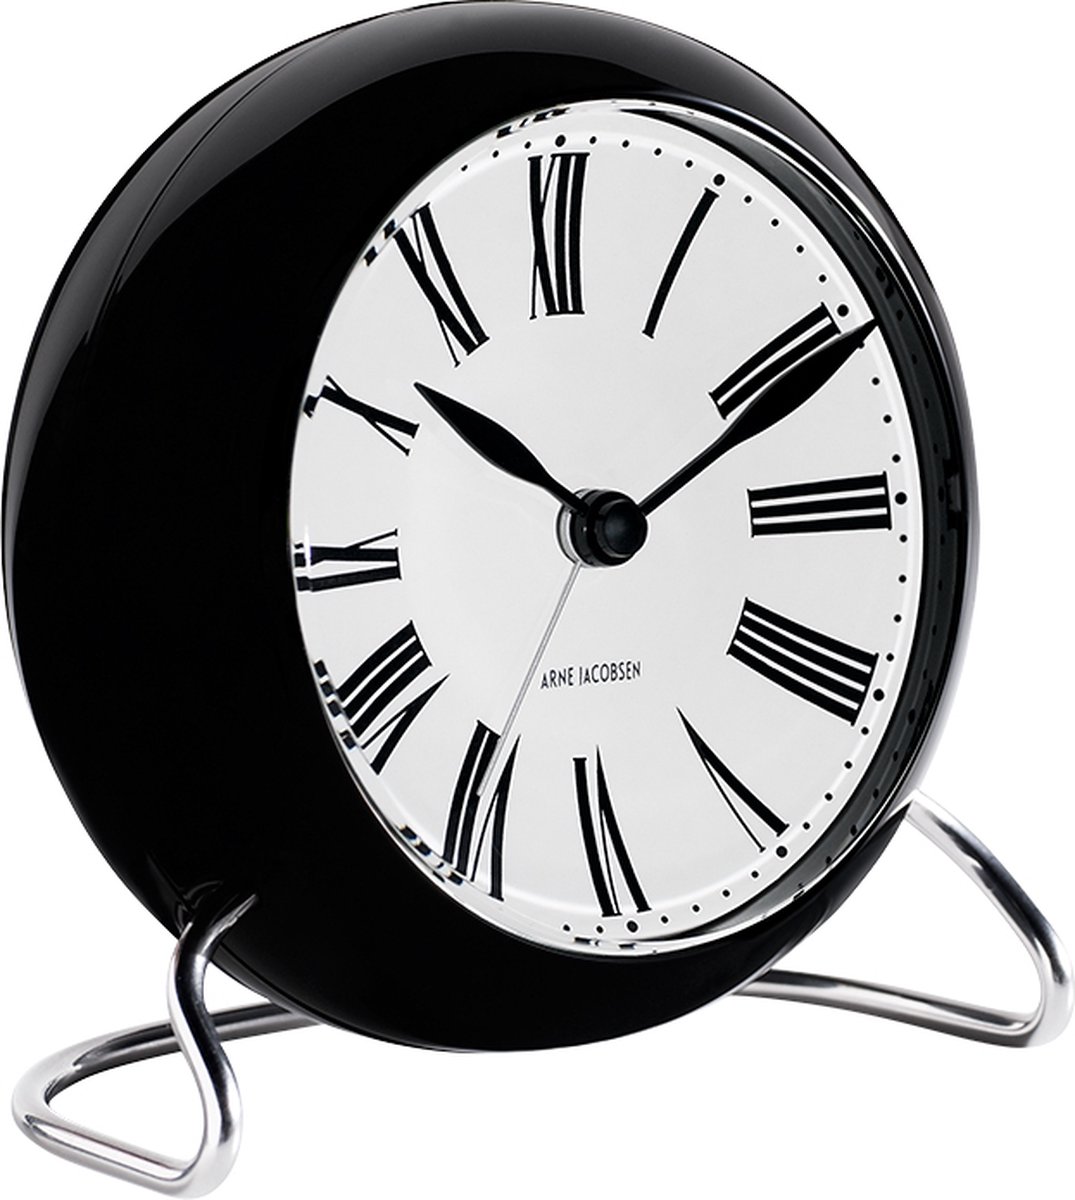 Arne Jacobsen - Roman tableclock black/white Ø11 cm alarm